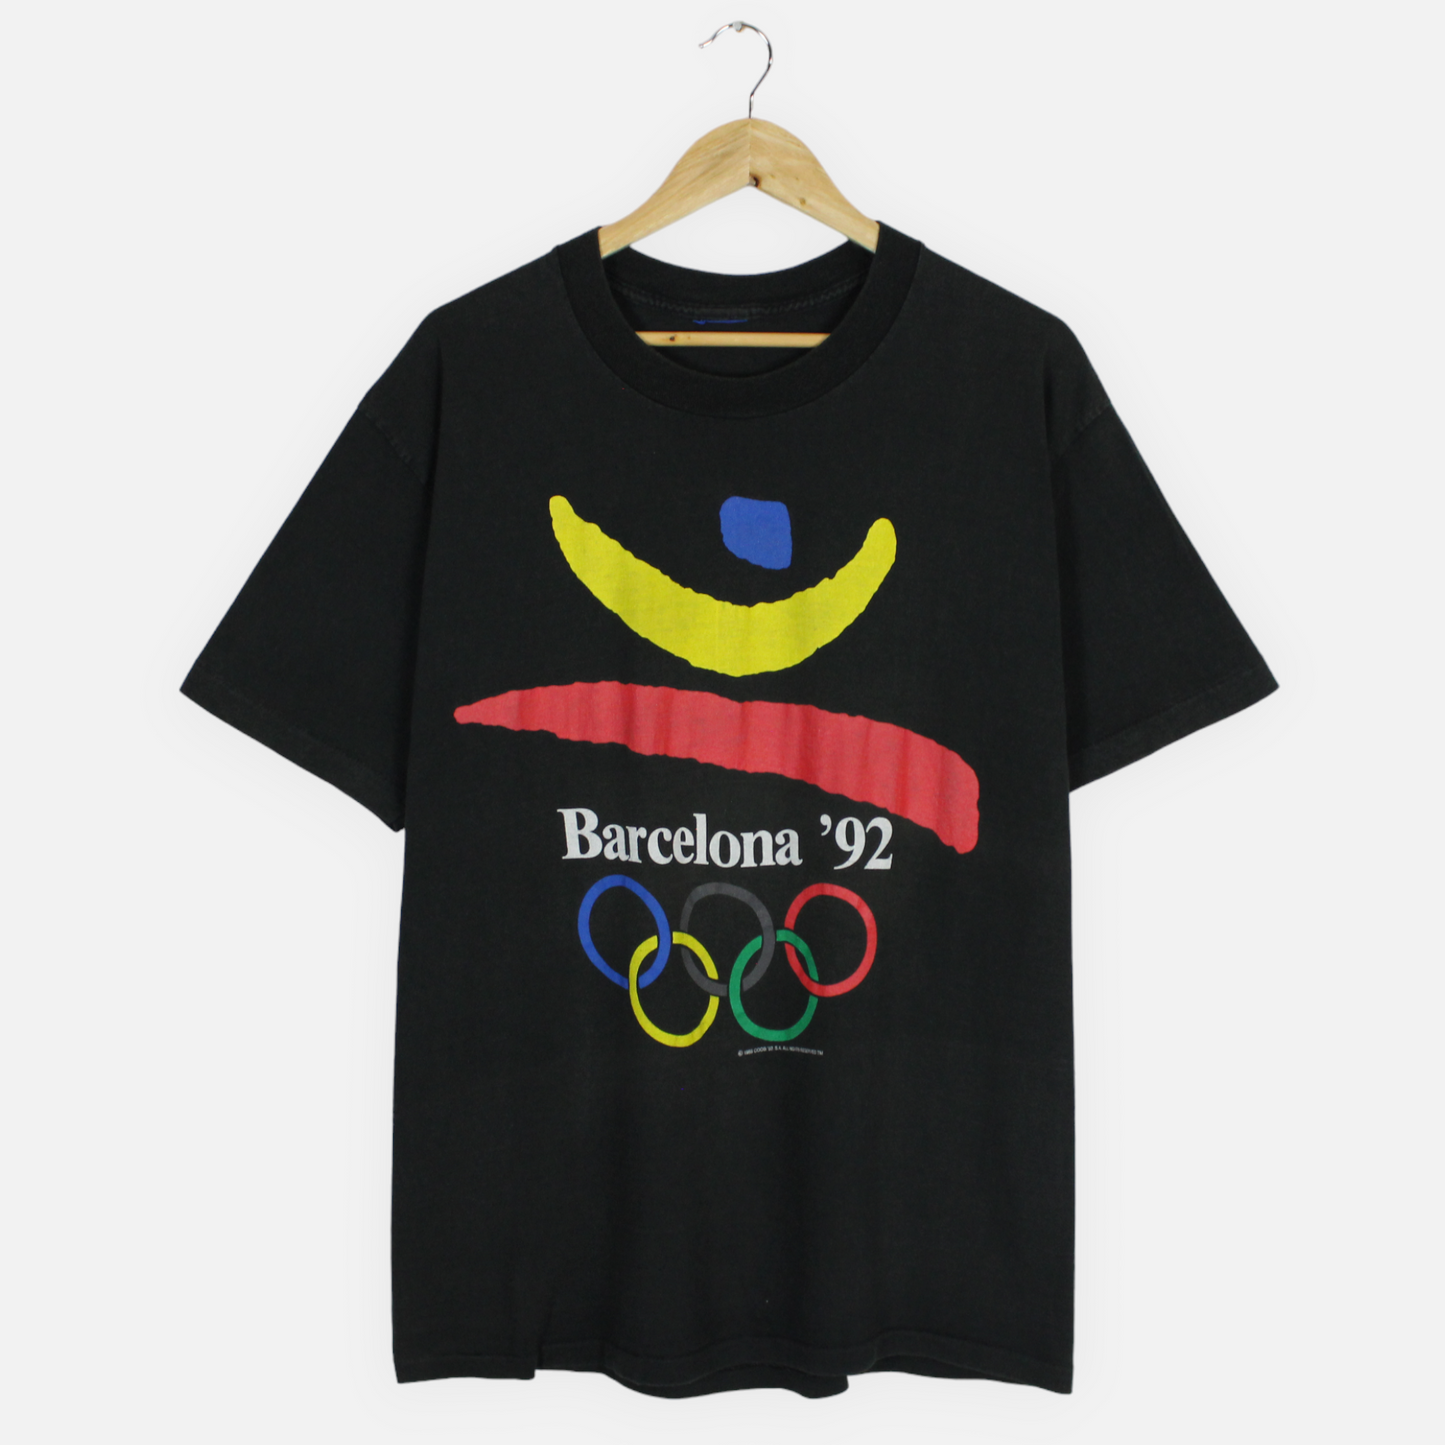 Vintage 1992 Barcelona Olympics Tee - XL